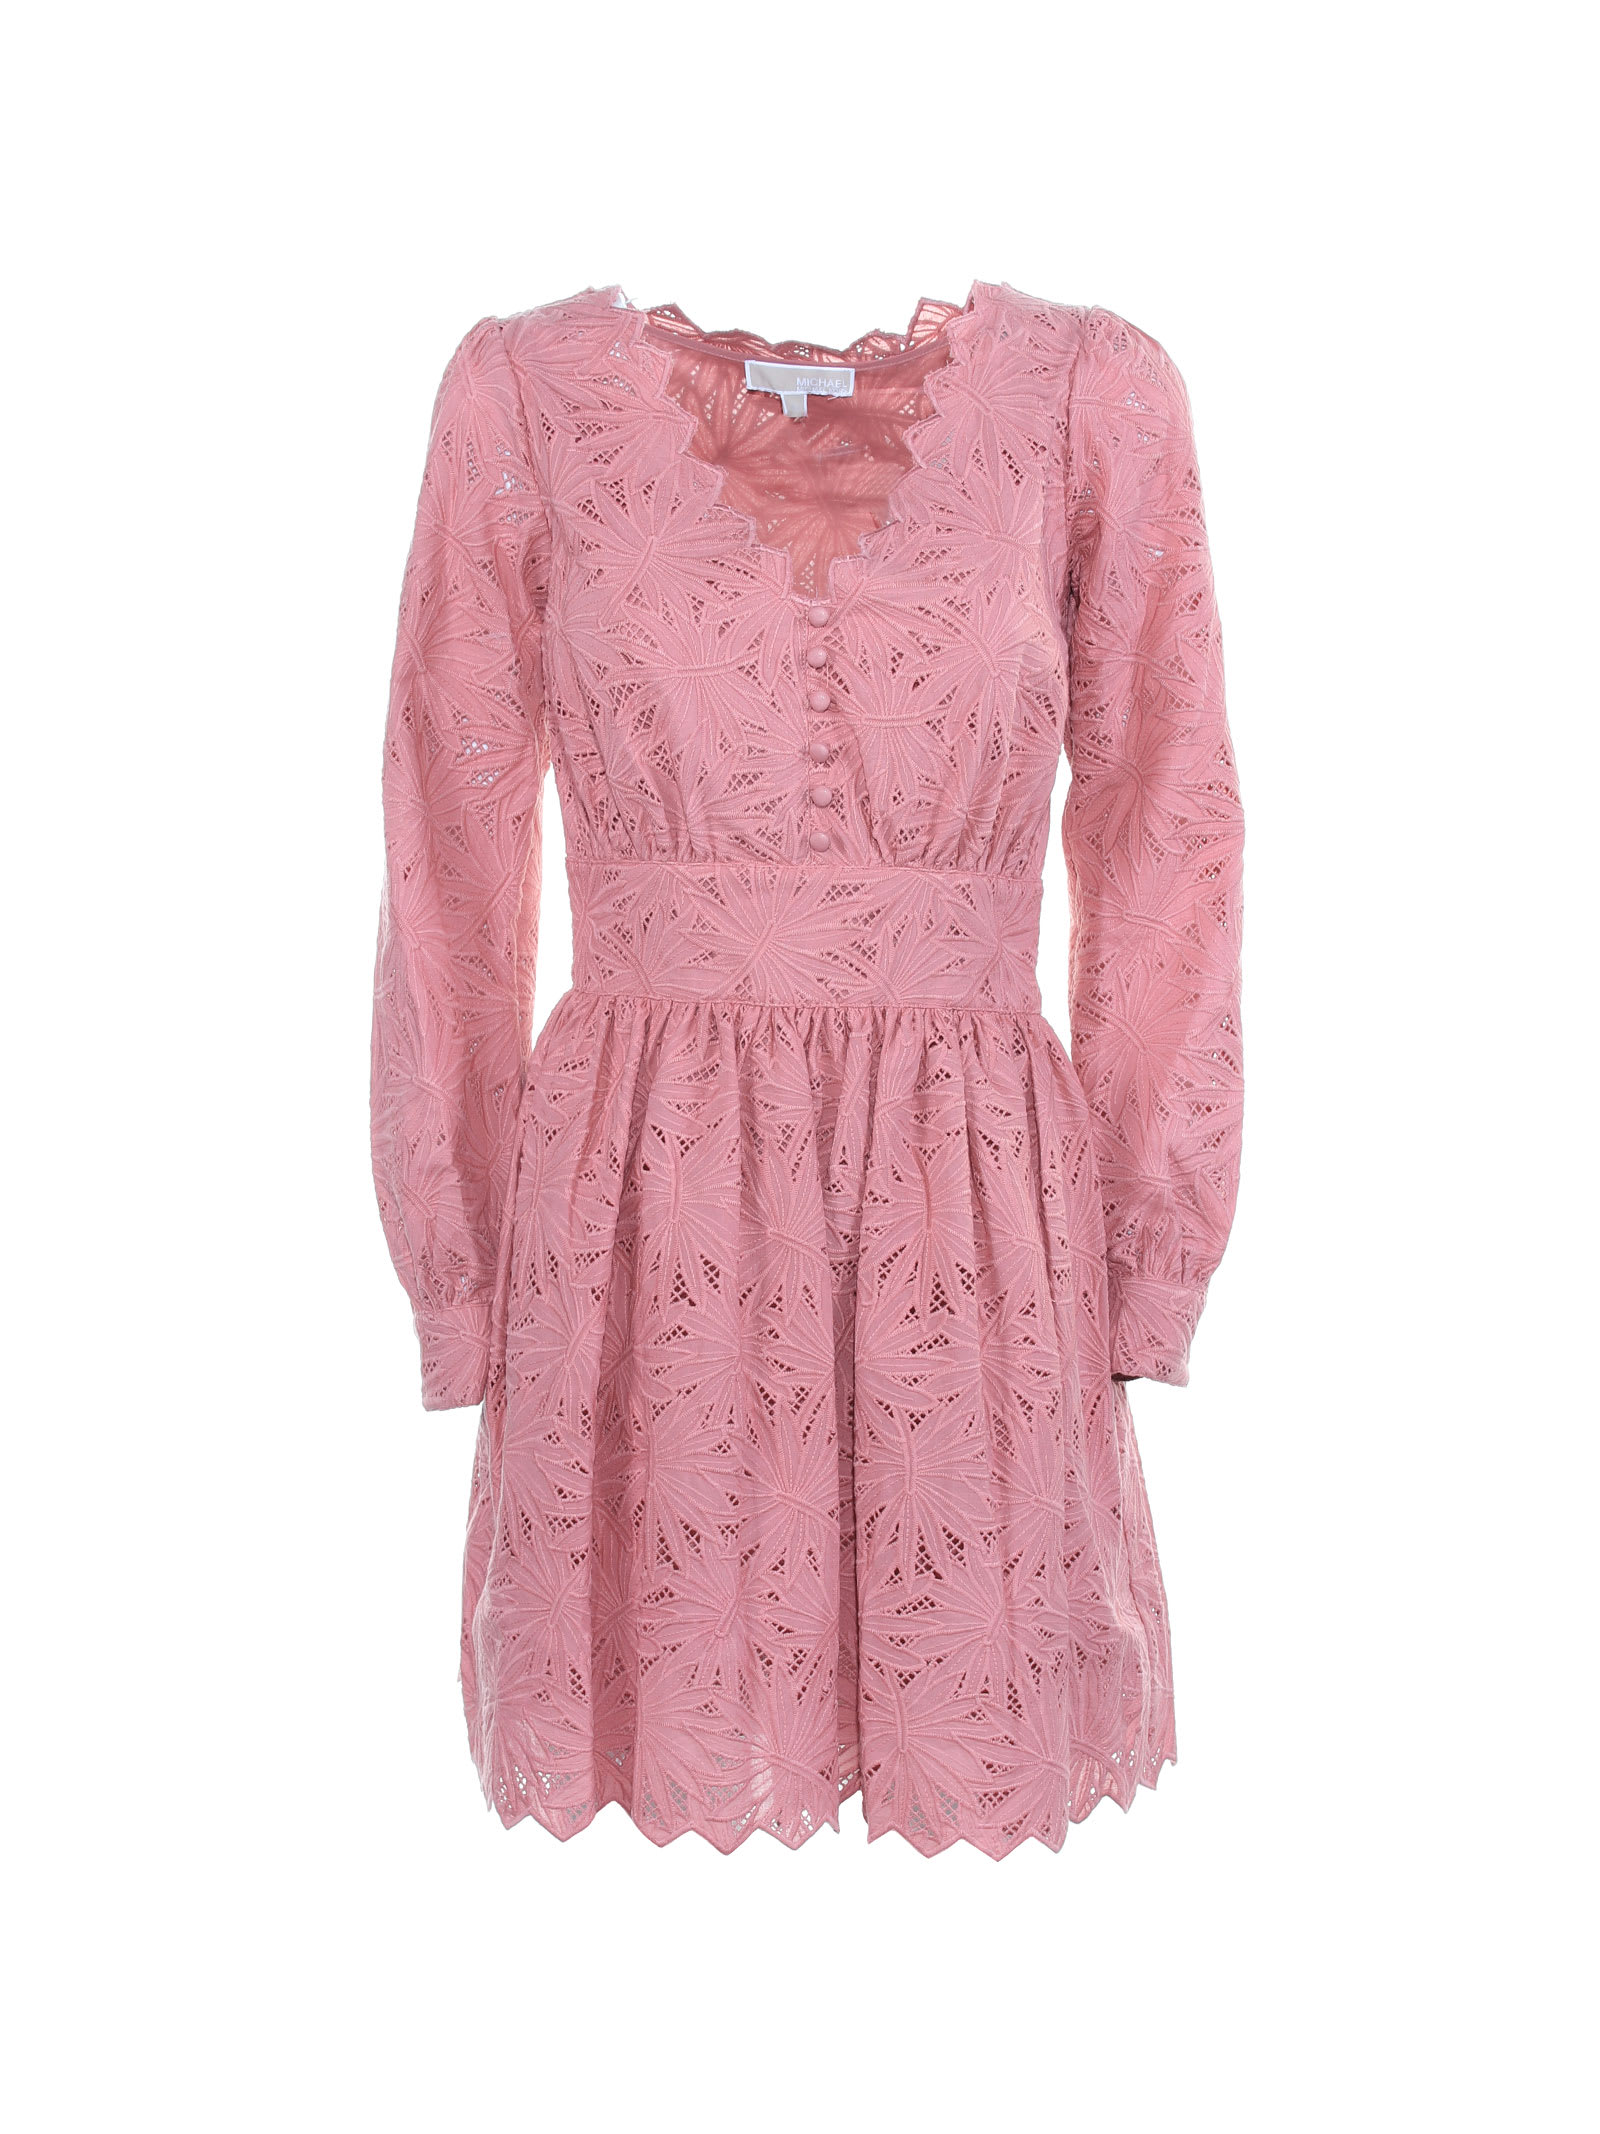 Michael Kors Pink Lace Dress